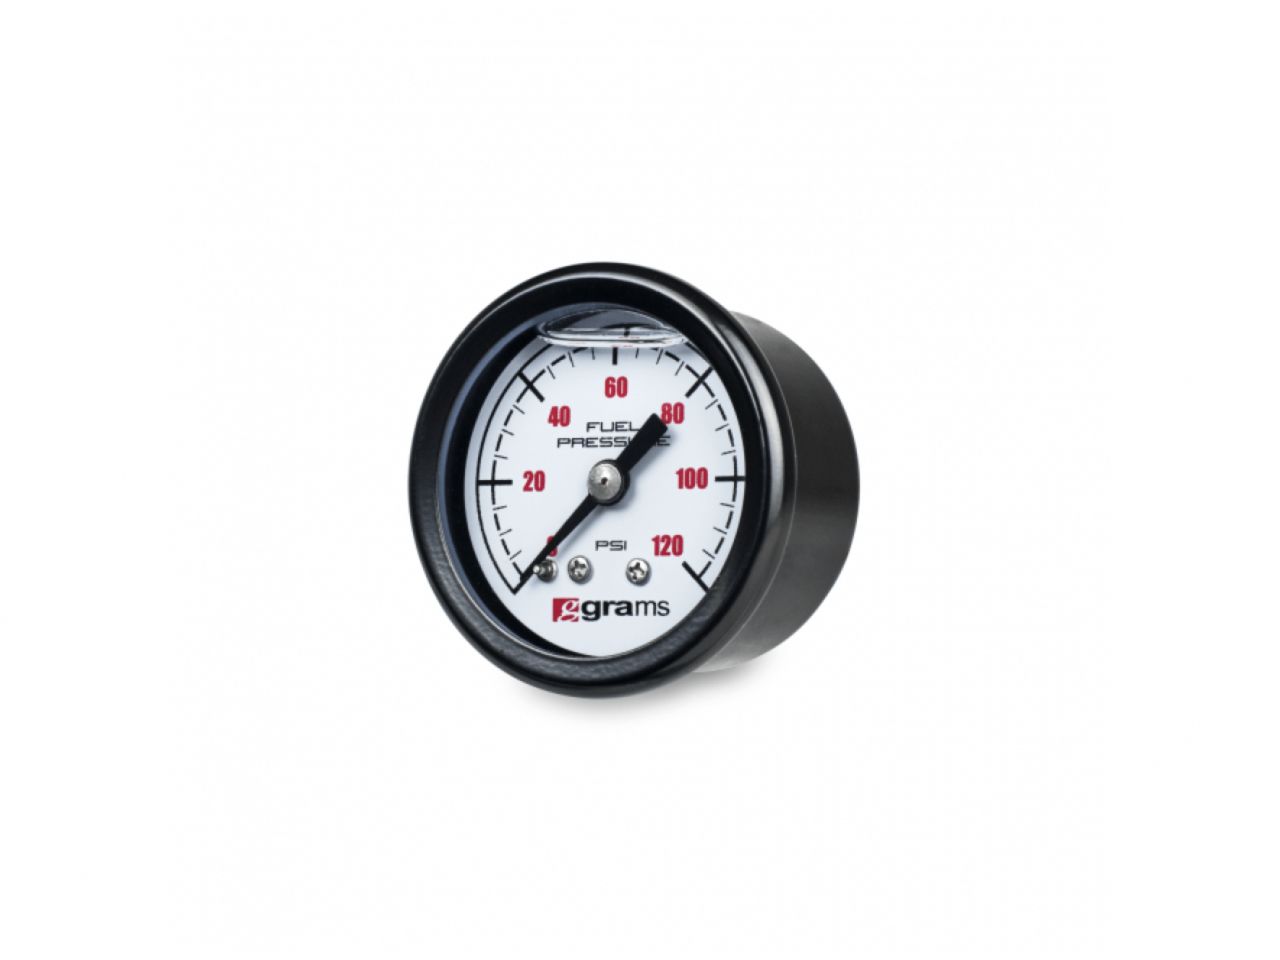 Grams Performance 0-120 PSI Fuel Pressure Gauge